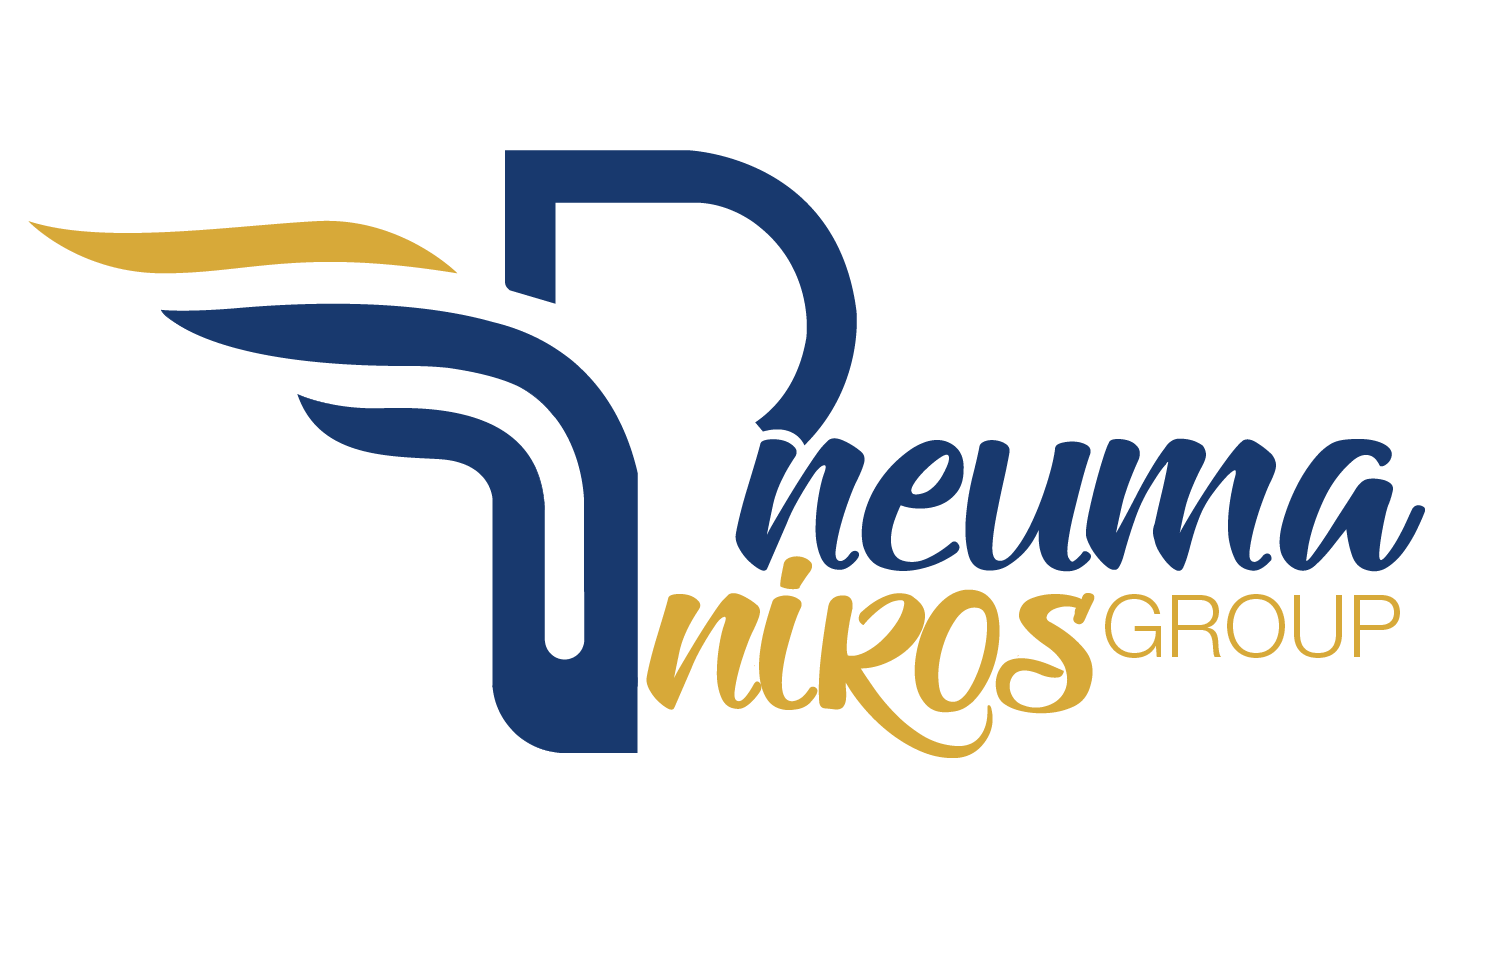 pneuma Nikos group Ltd